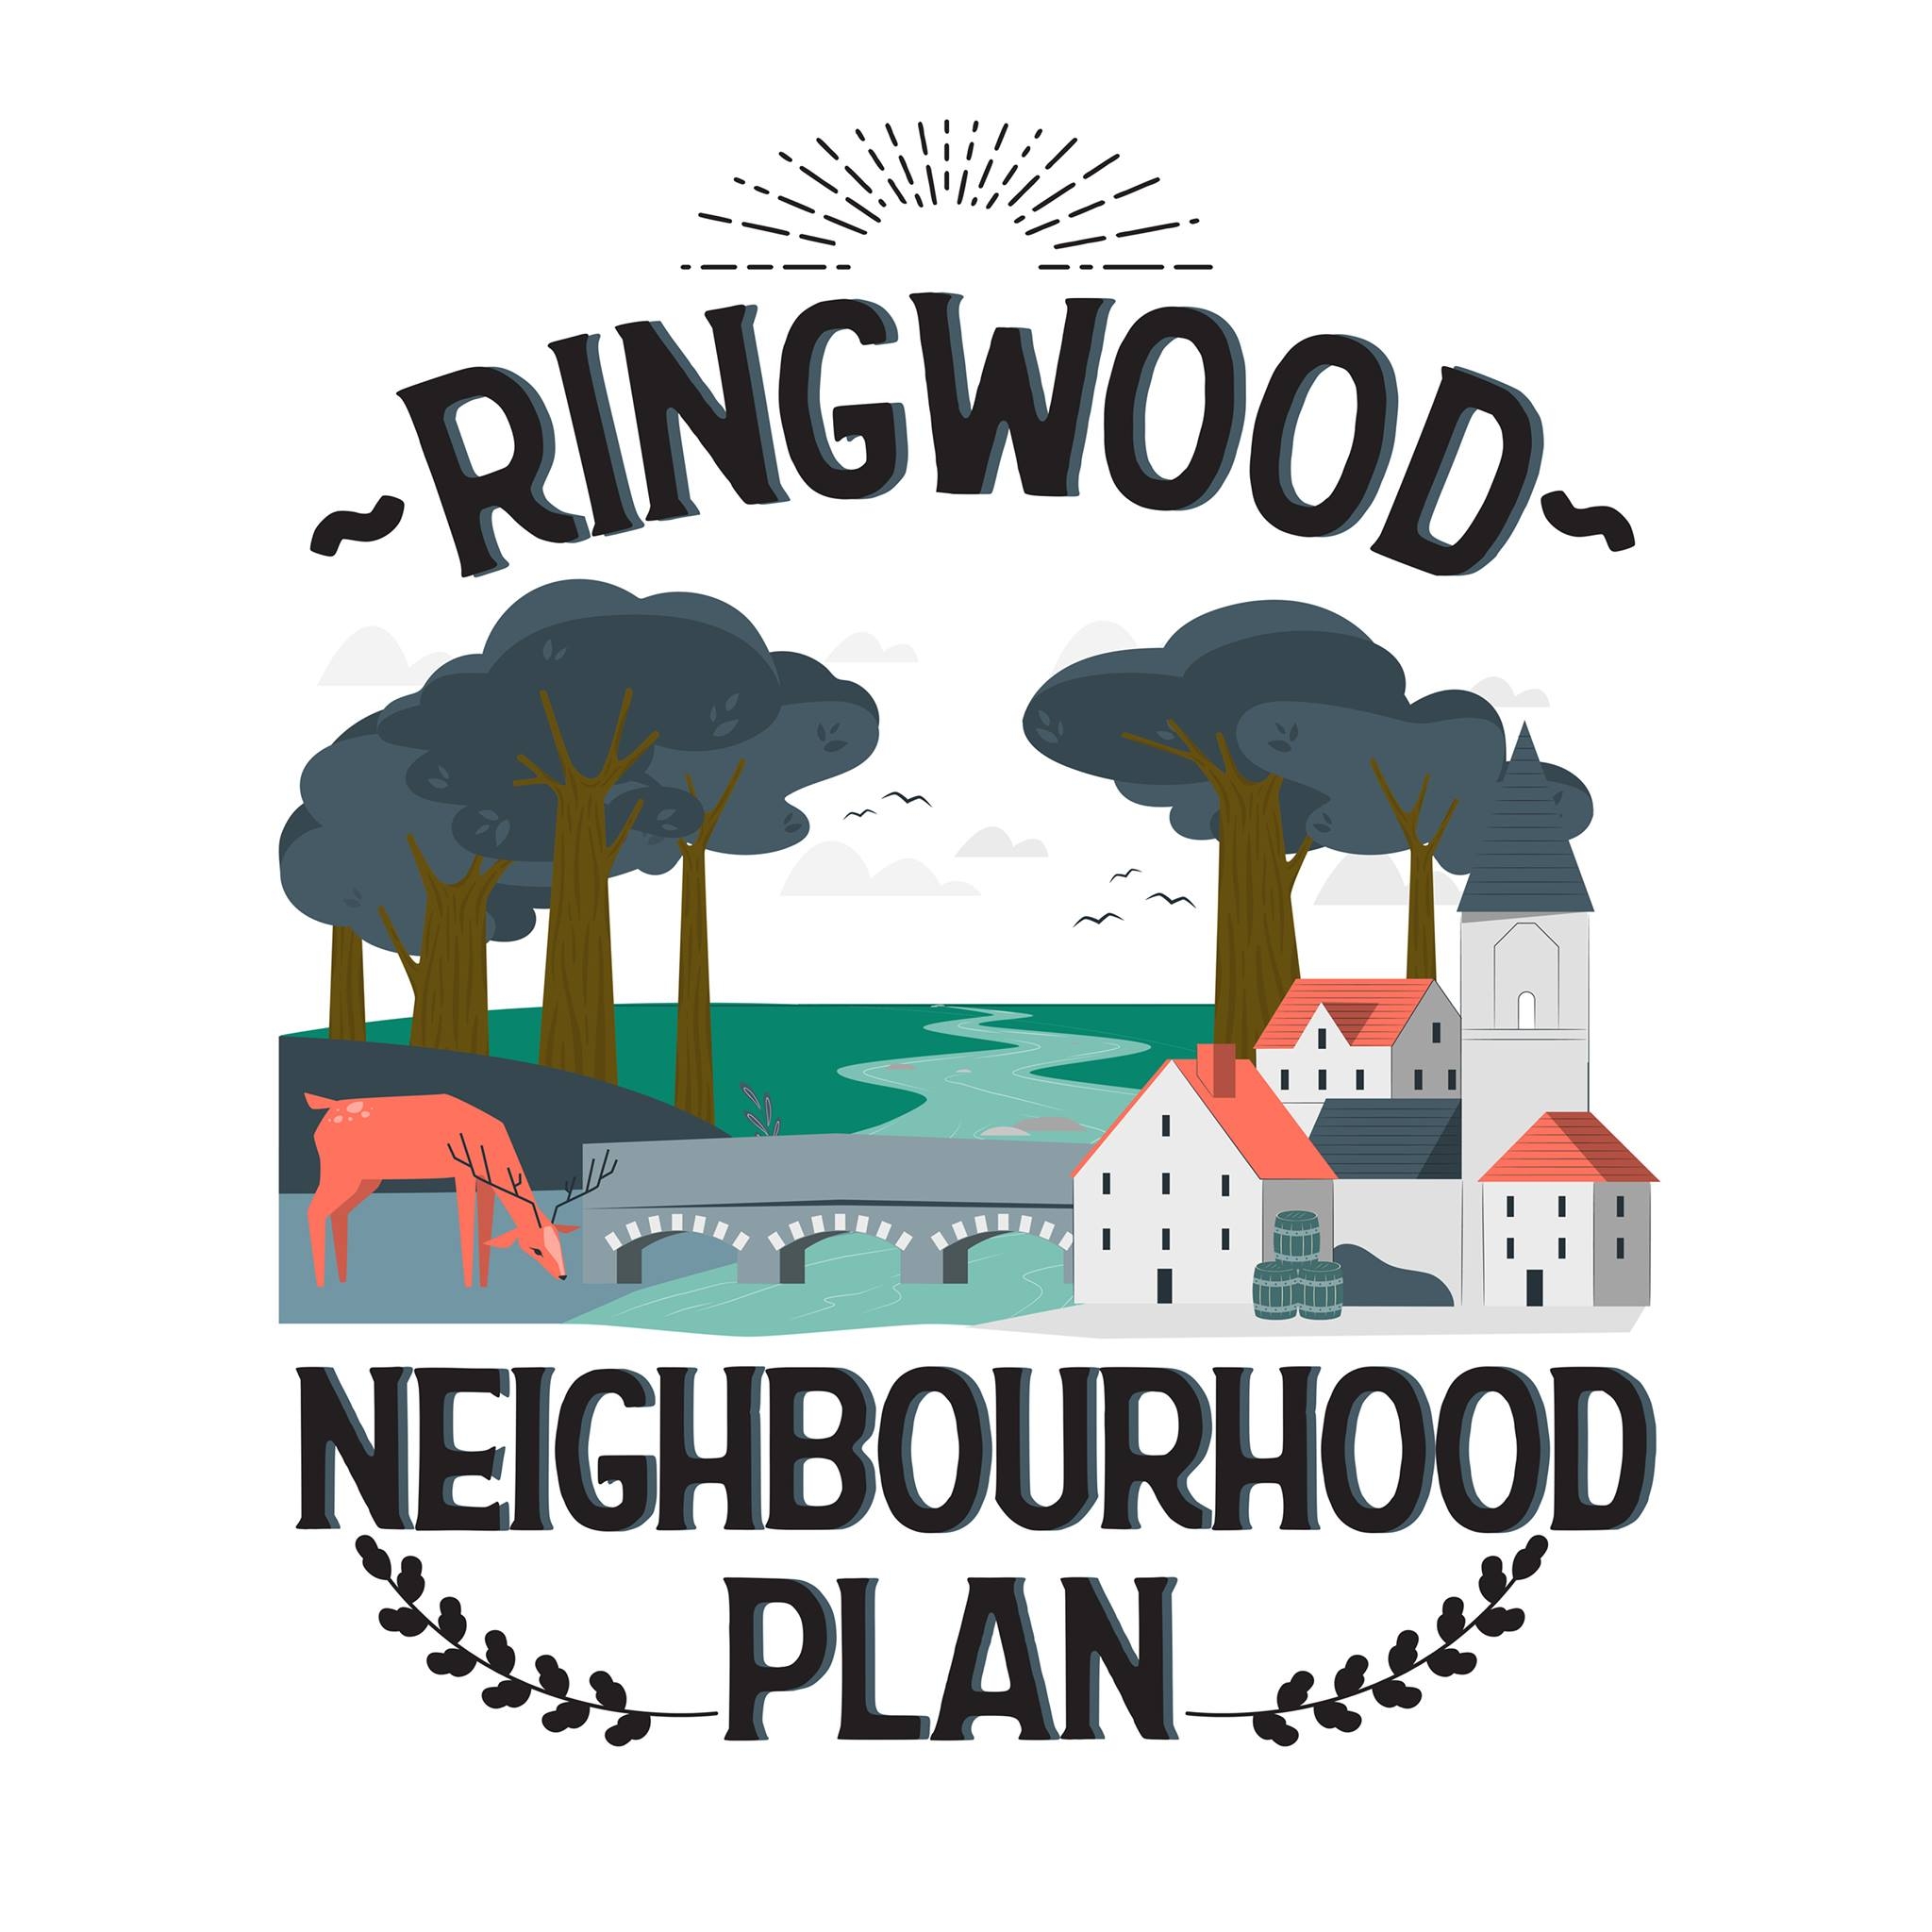 Ringwood Neighbourhood Plan - Update on Progress and Call for Volunteers